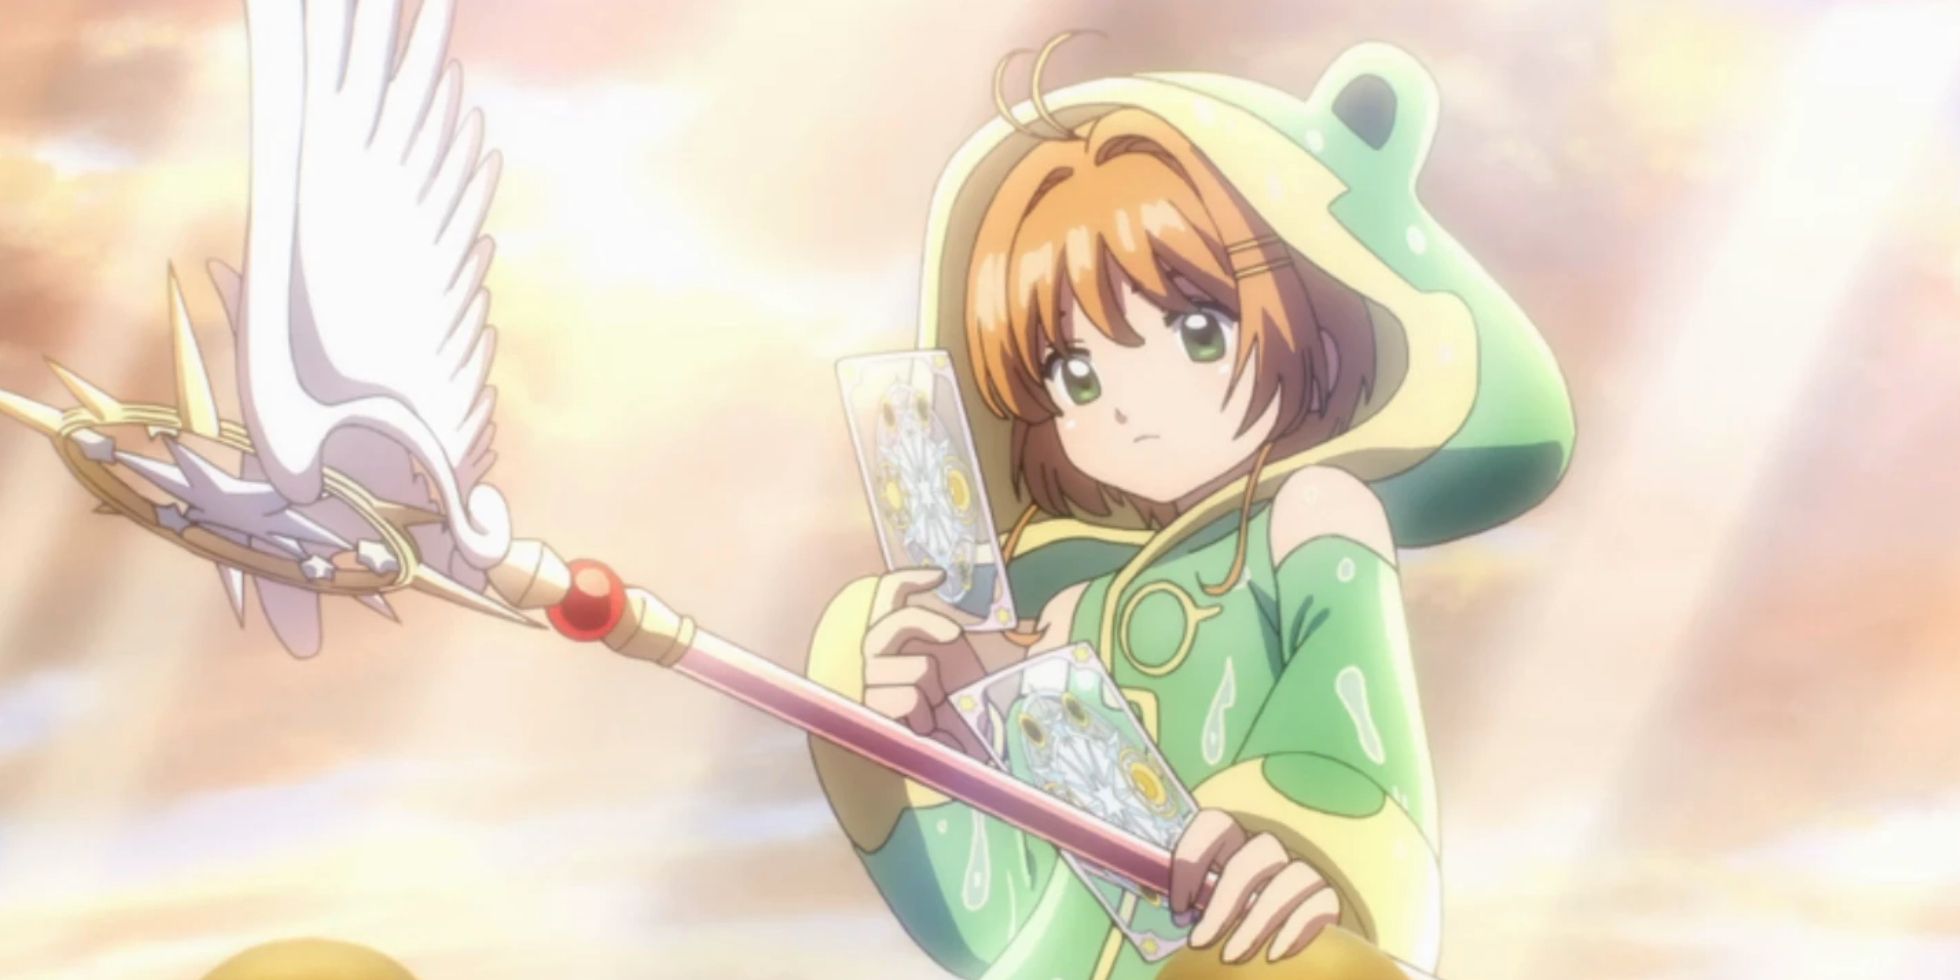 Sakura gains a new card while wearing her frog costume in Cardcaptor Sakura Clear Card